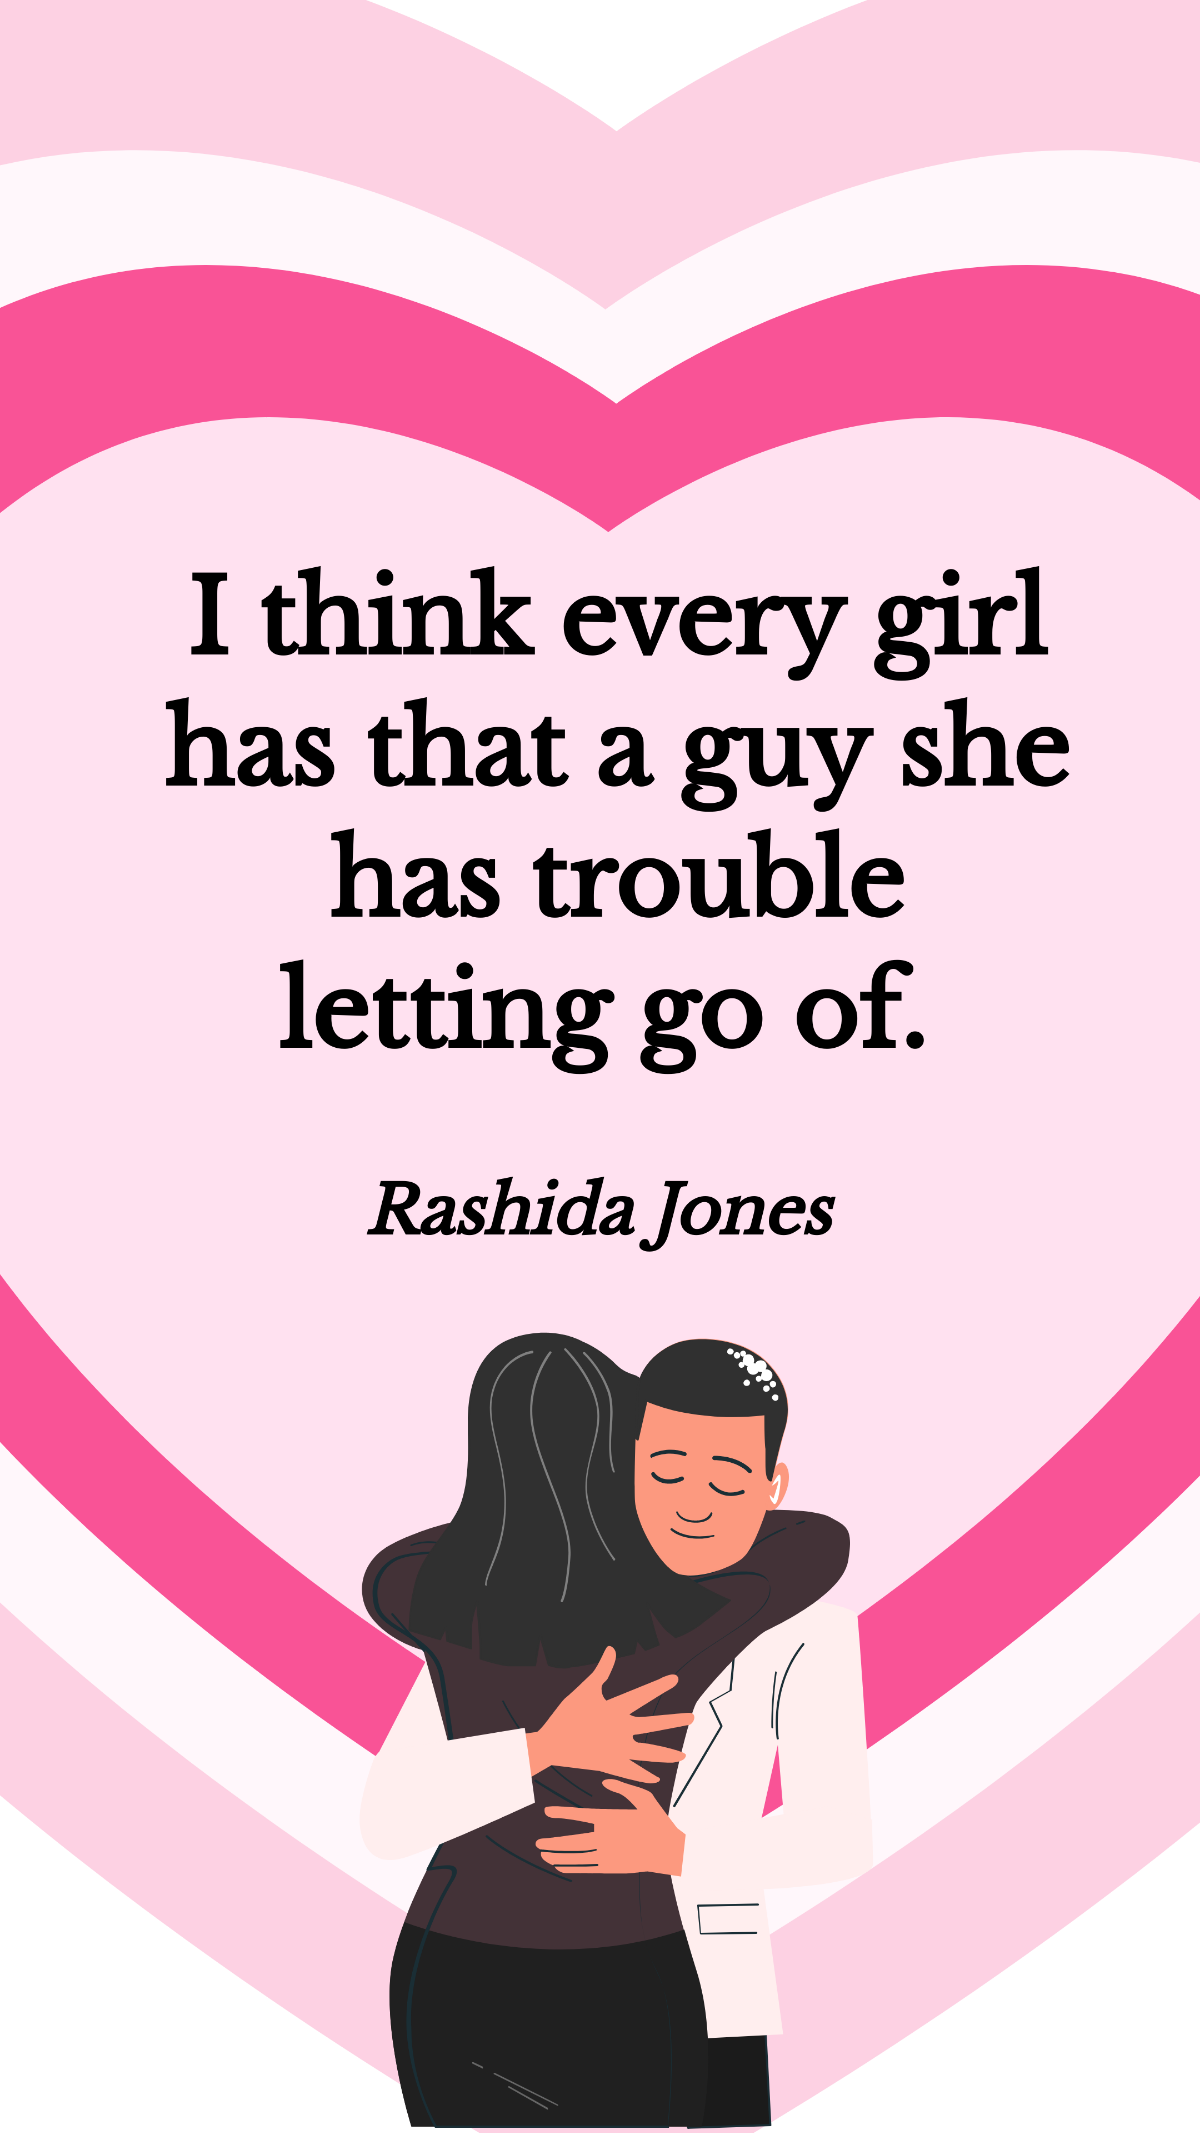 Rashida Jones - I think every girl has that a guy she has trouble letting go of.